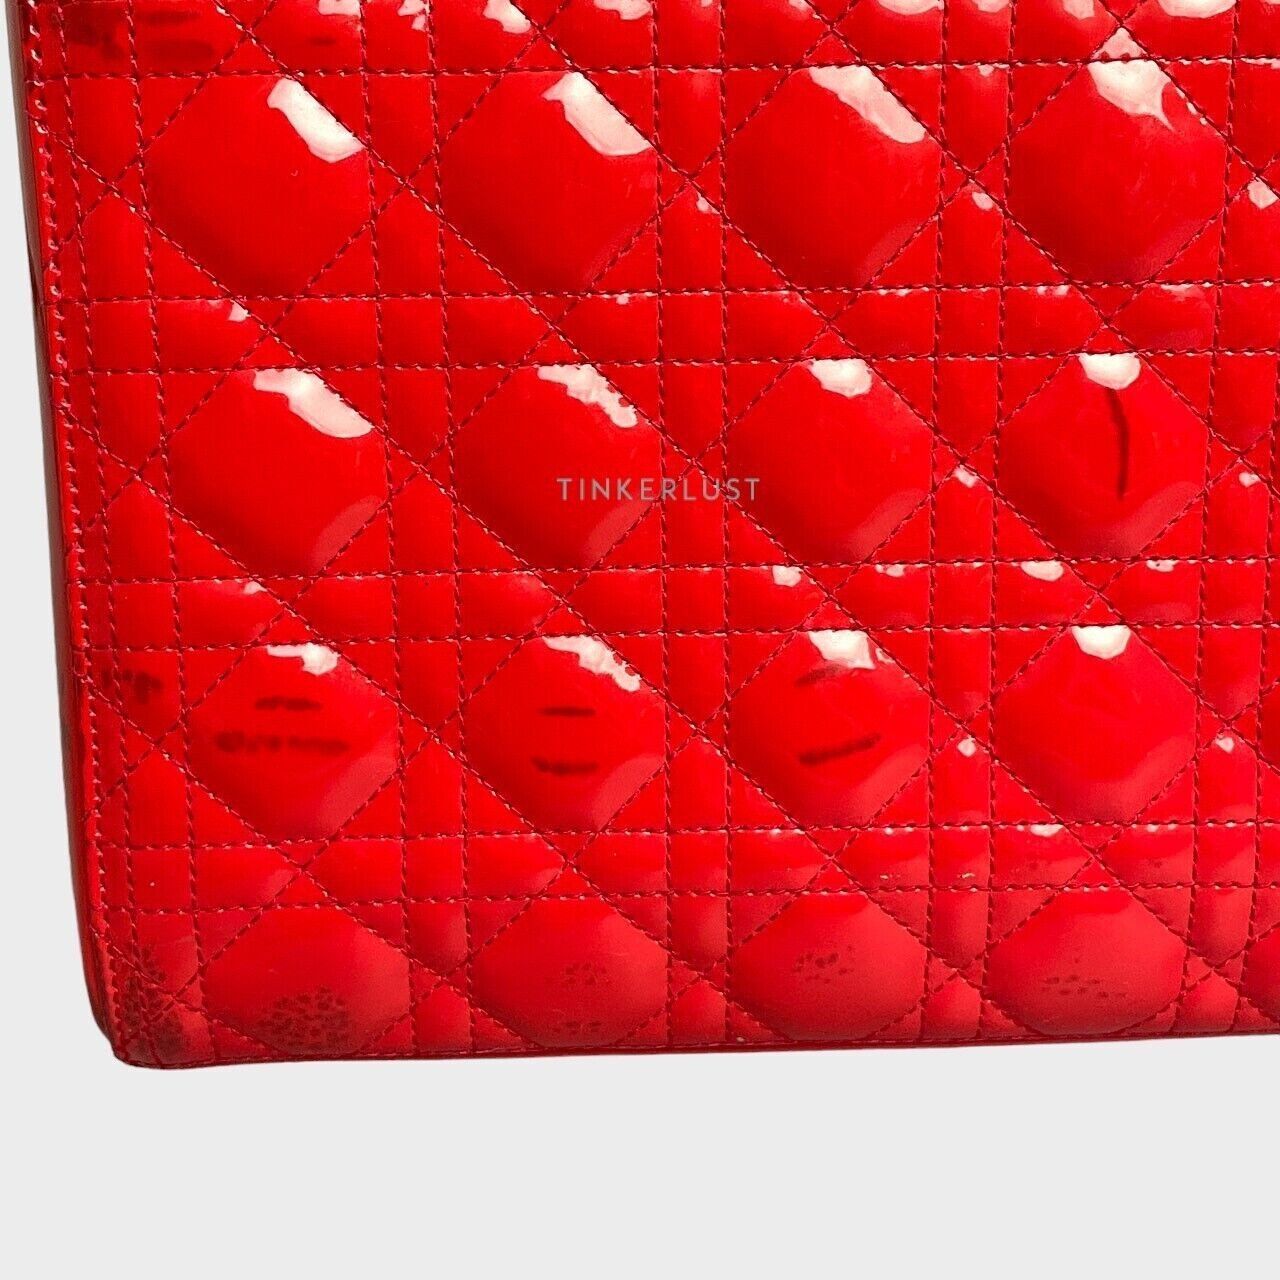 Christian Dior Lady Dior Medium Patent Leather Red Satchel Bag